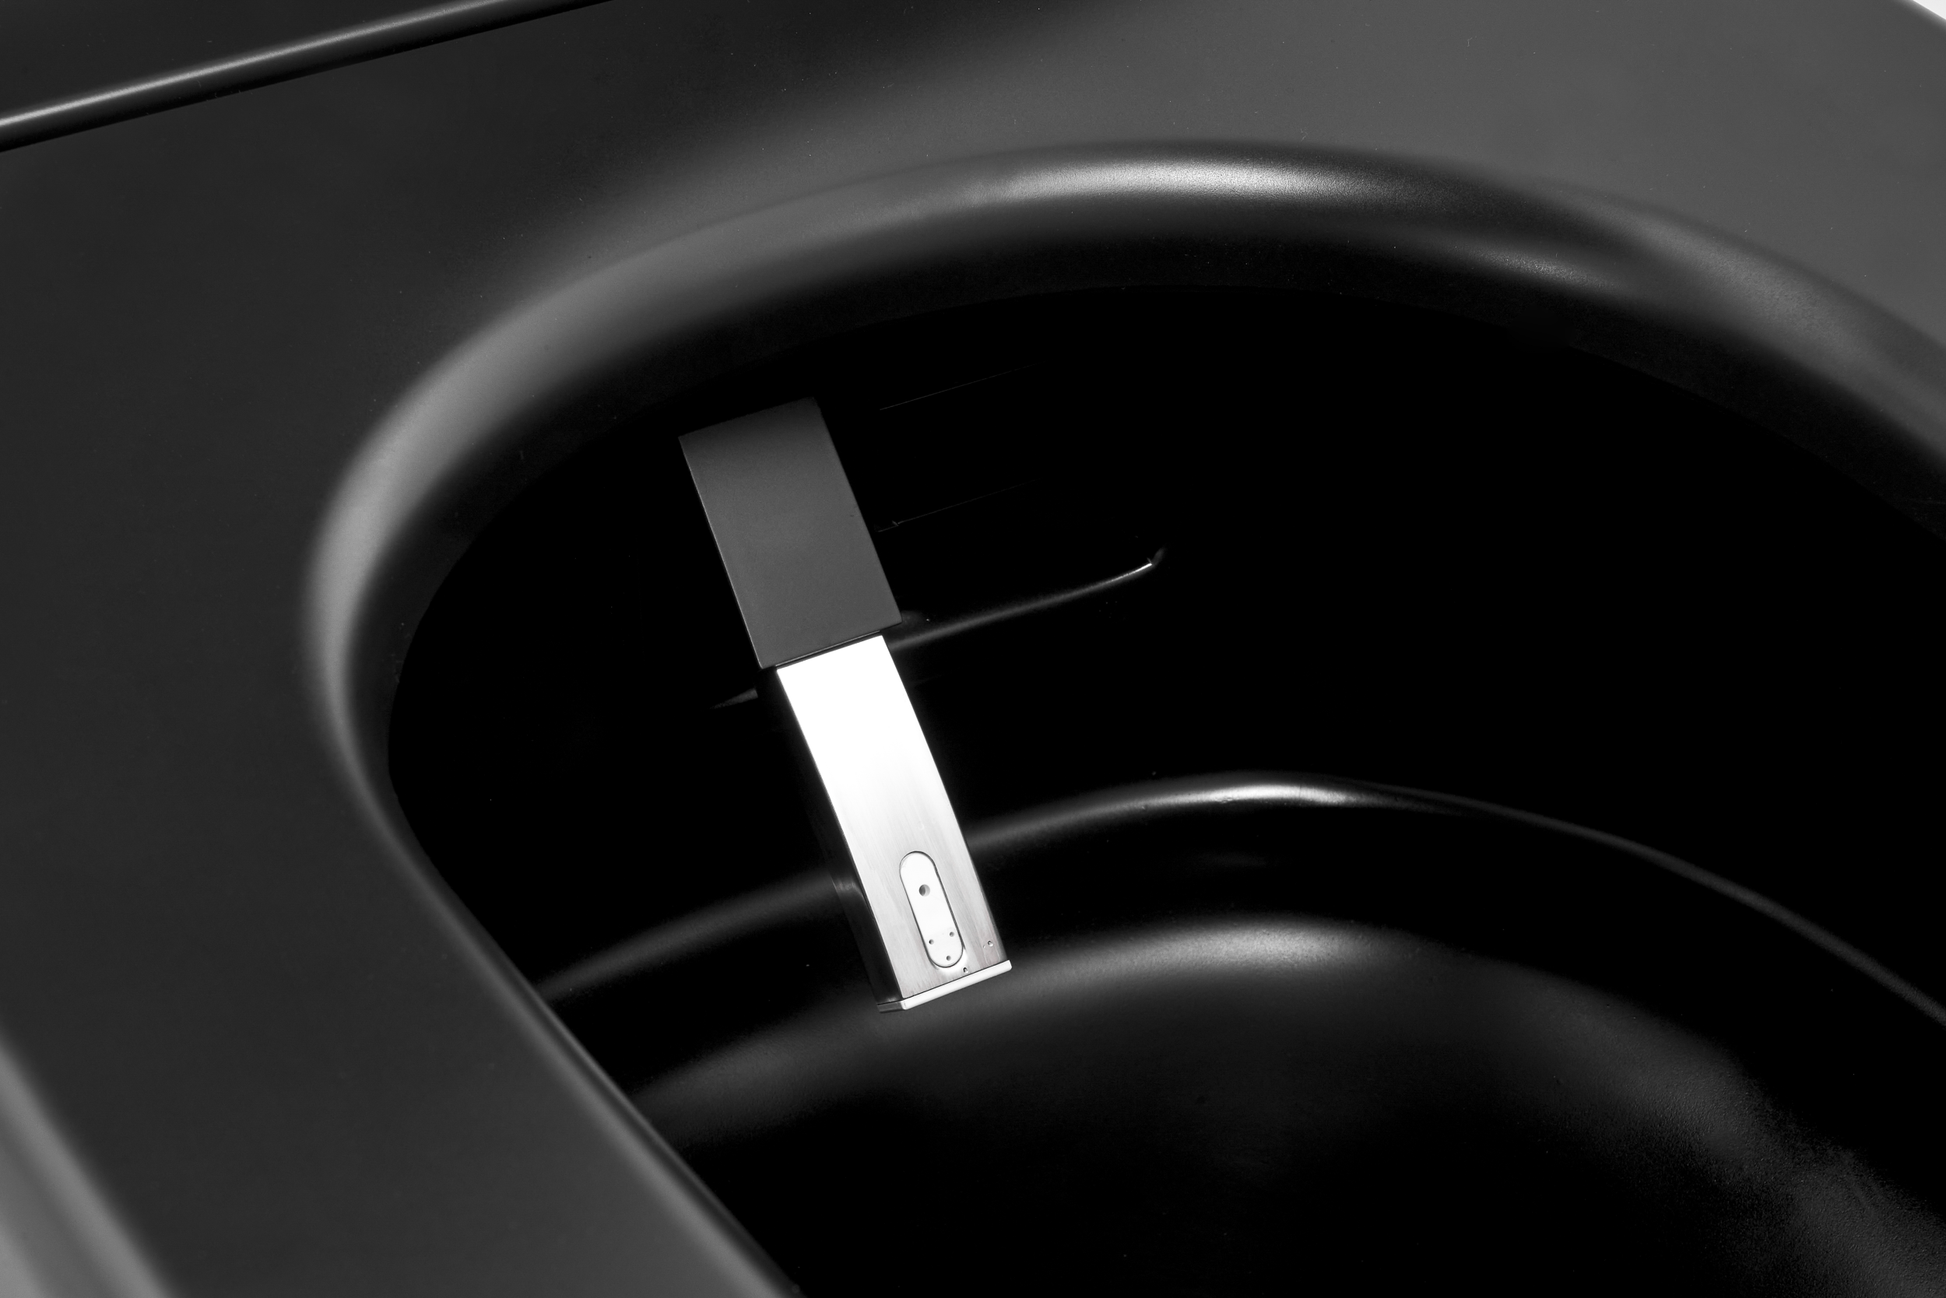 Multifunctional flat square smart toilet with matte black-ceramic